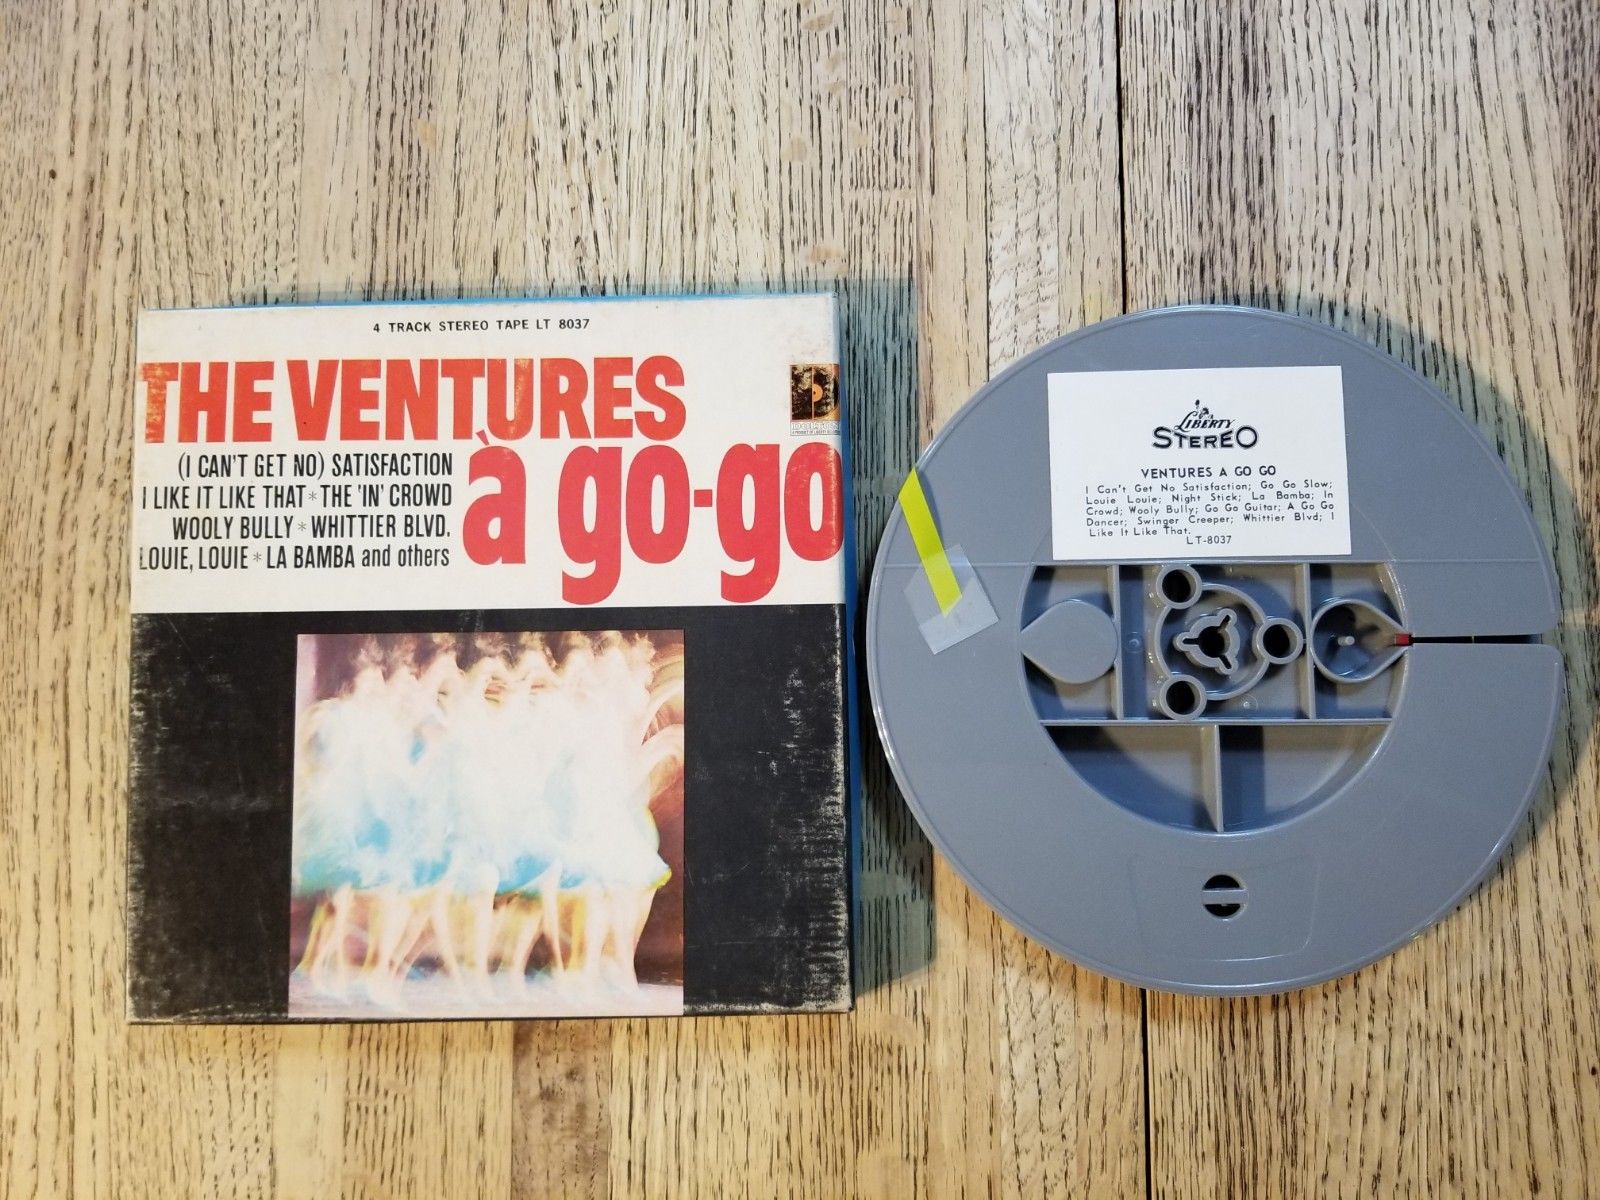  The Ventures A Go Go Reel To Reel Tape 7 1/2 IPS